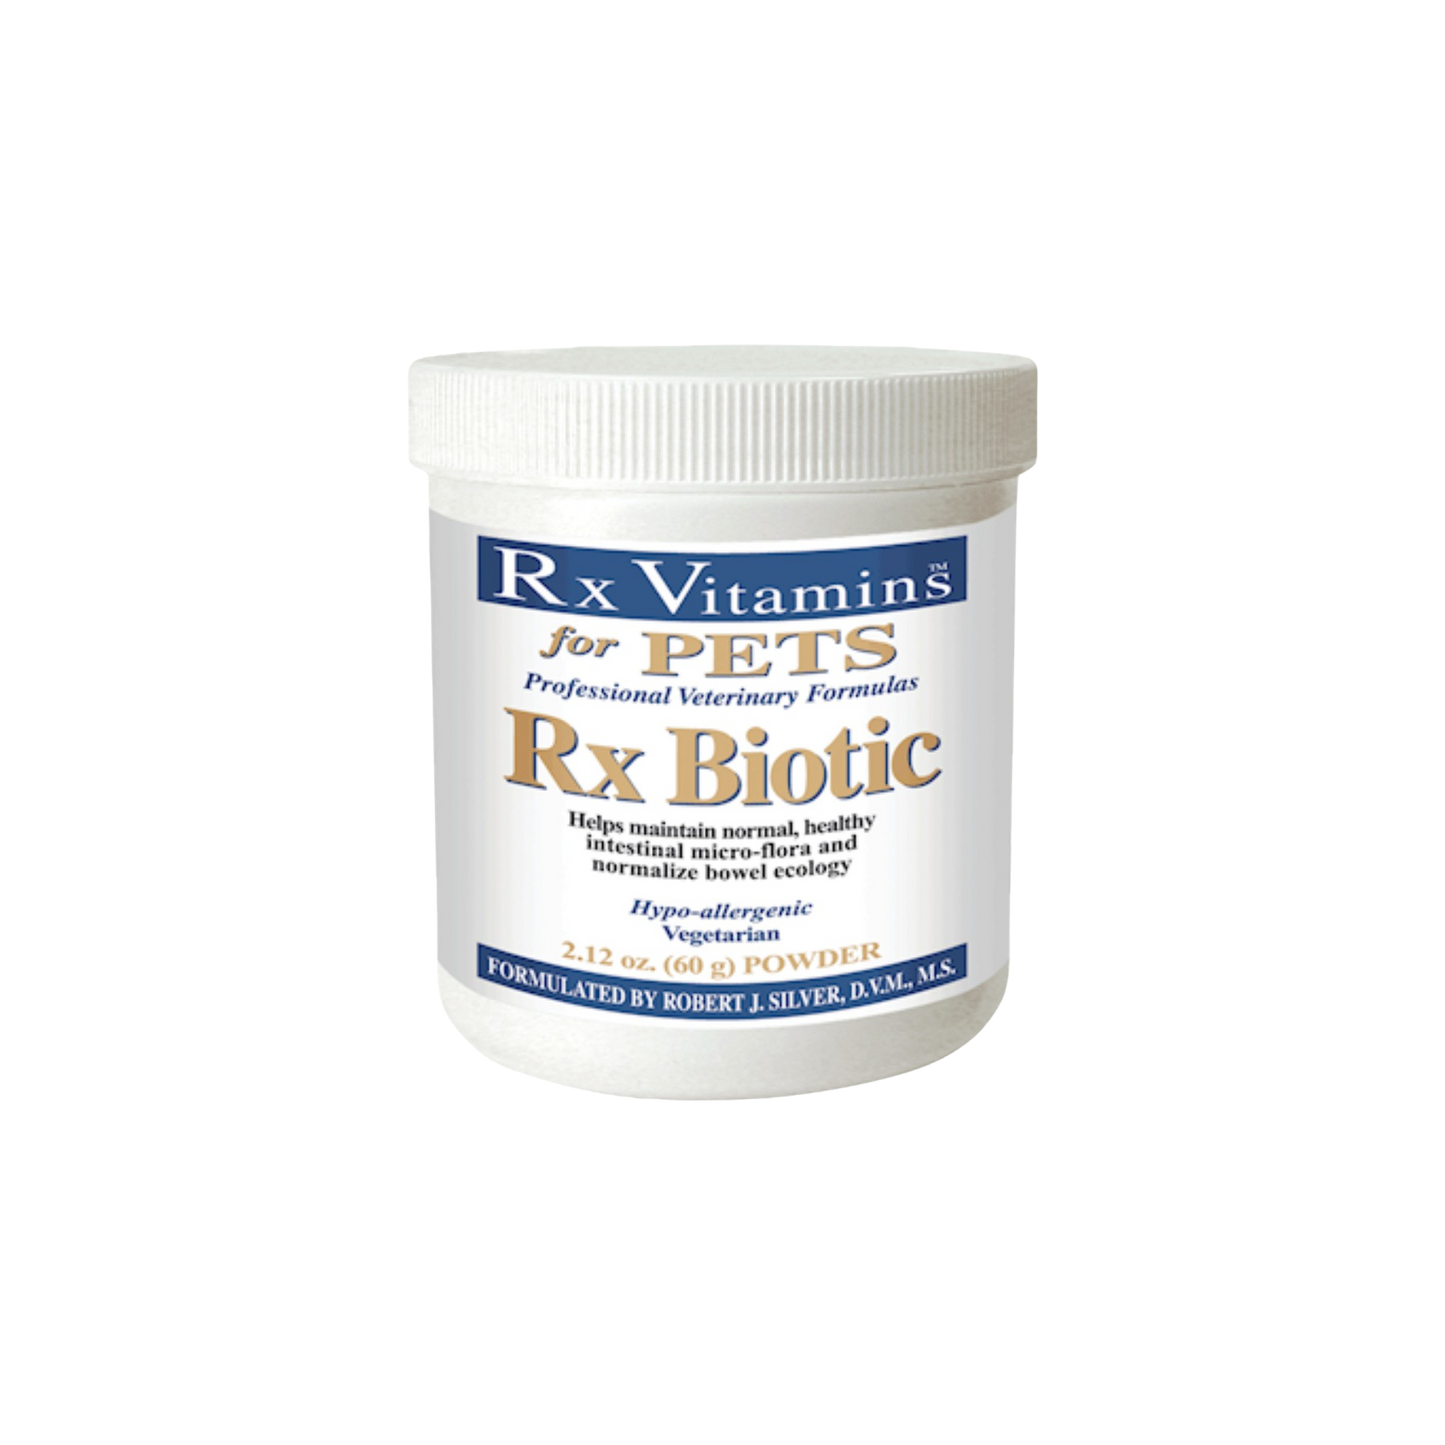 Rx Vitamins for Pets Rx Biotic Powder